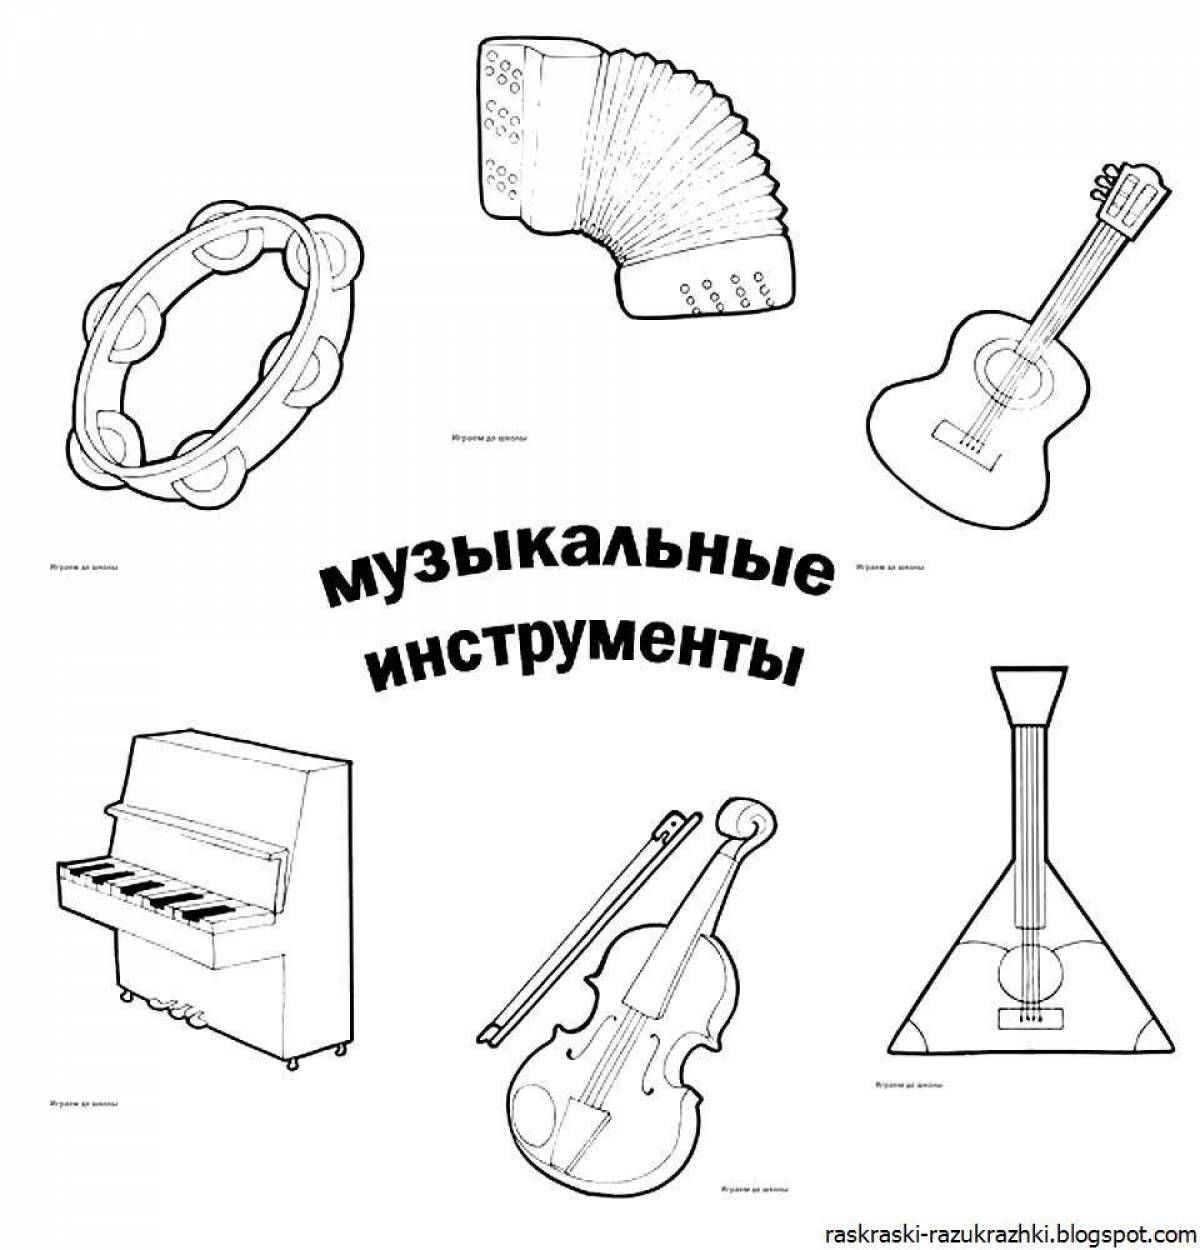 Russian folk instruments #8